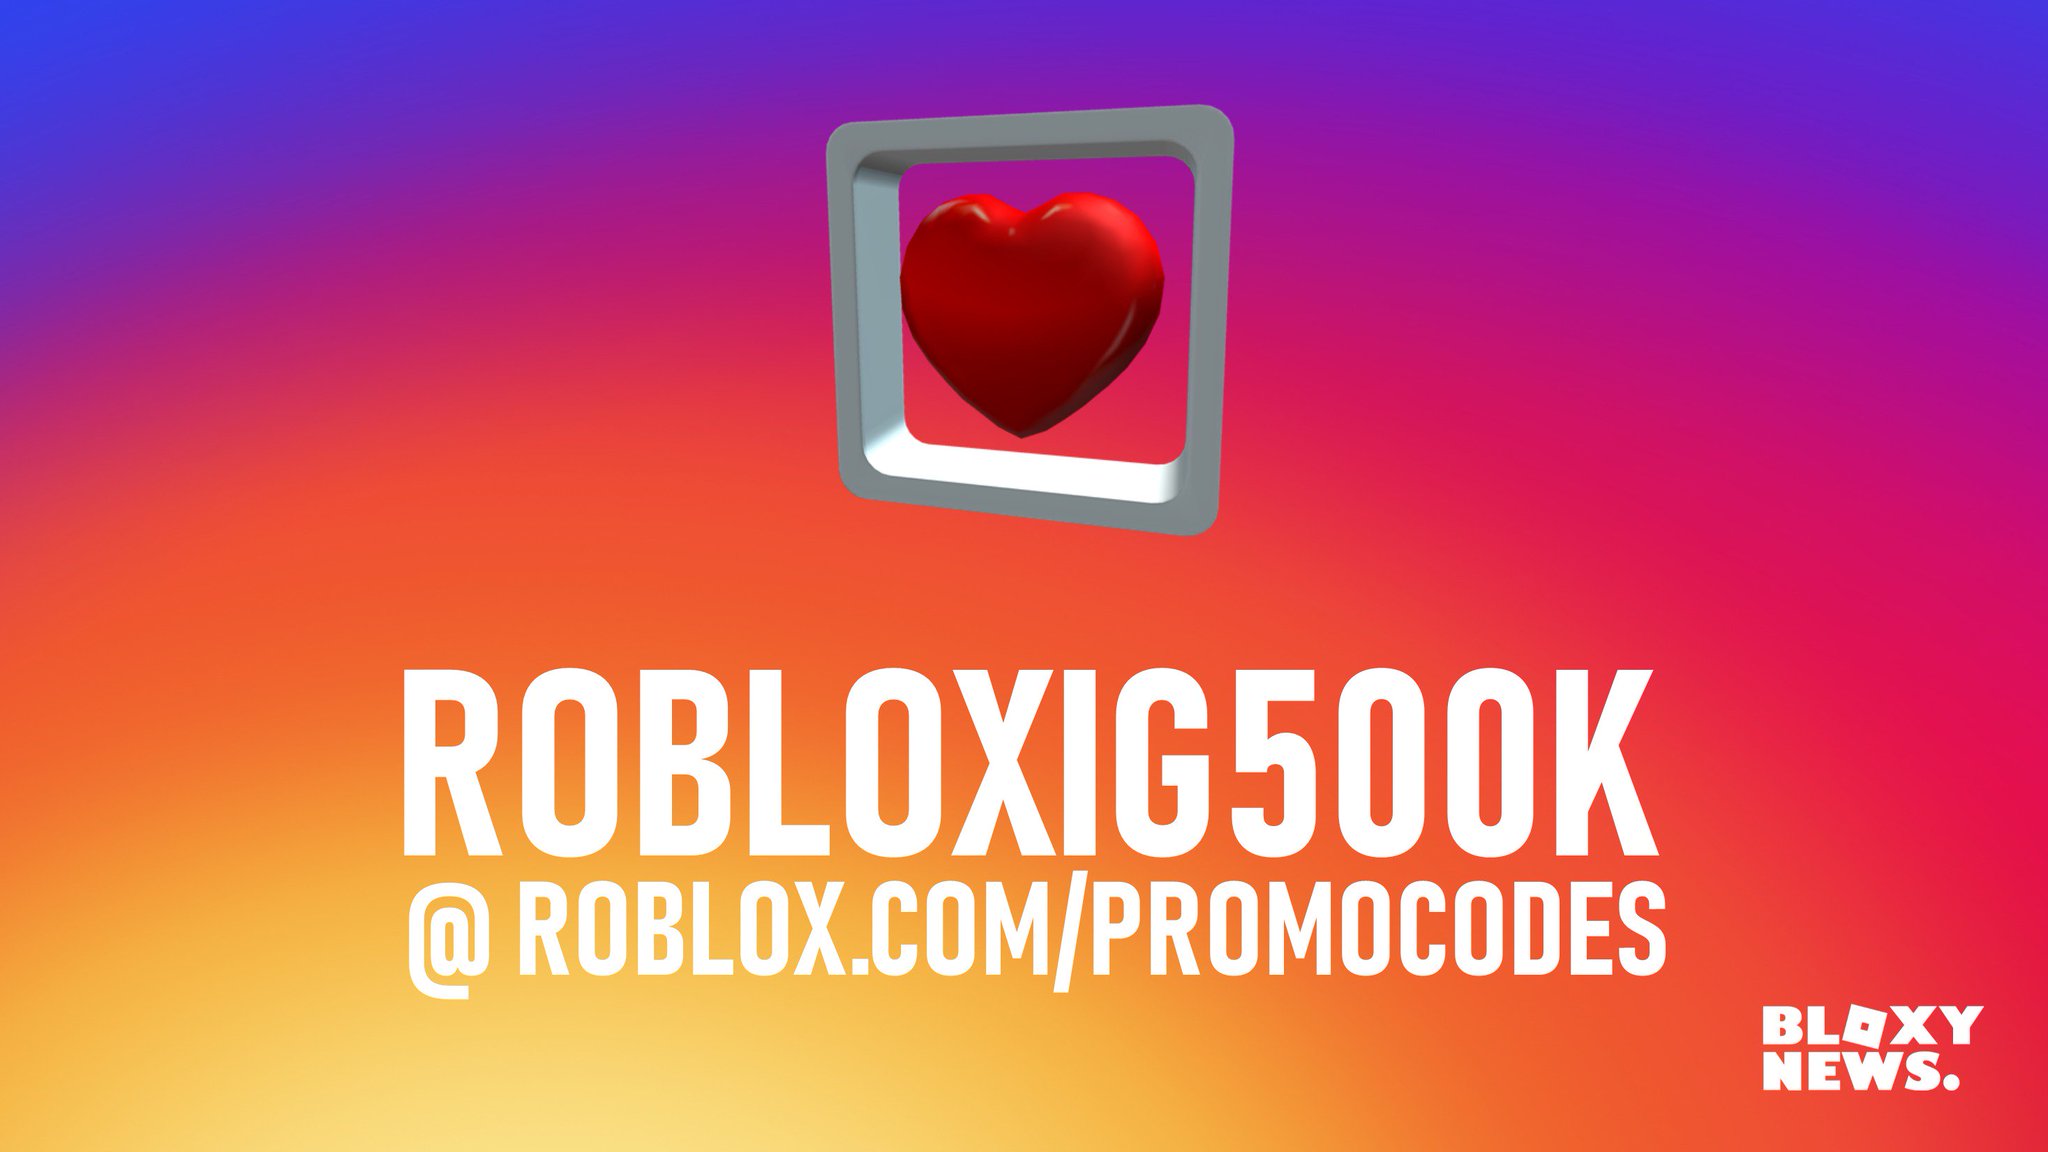 Bloxy News On Twitter Bloxynews Roblox Just Hit 500k